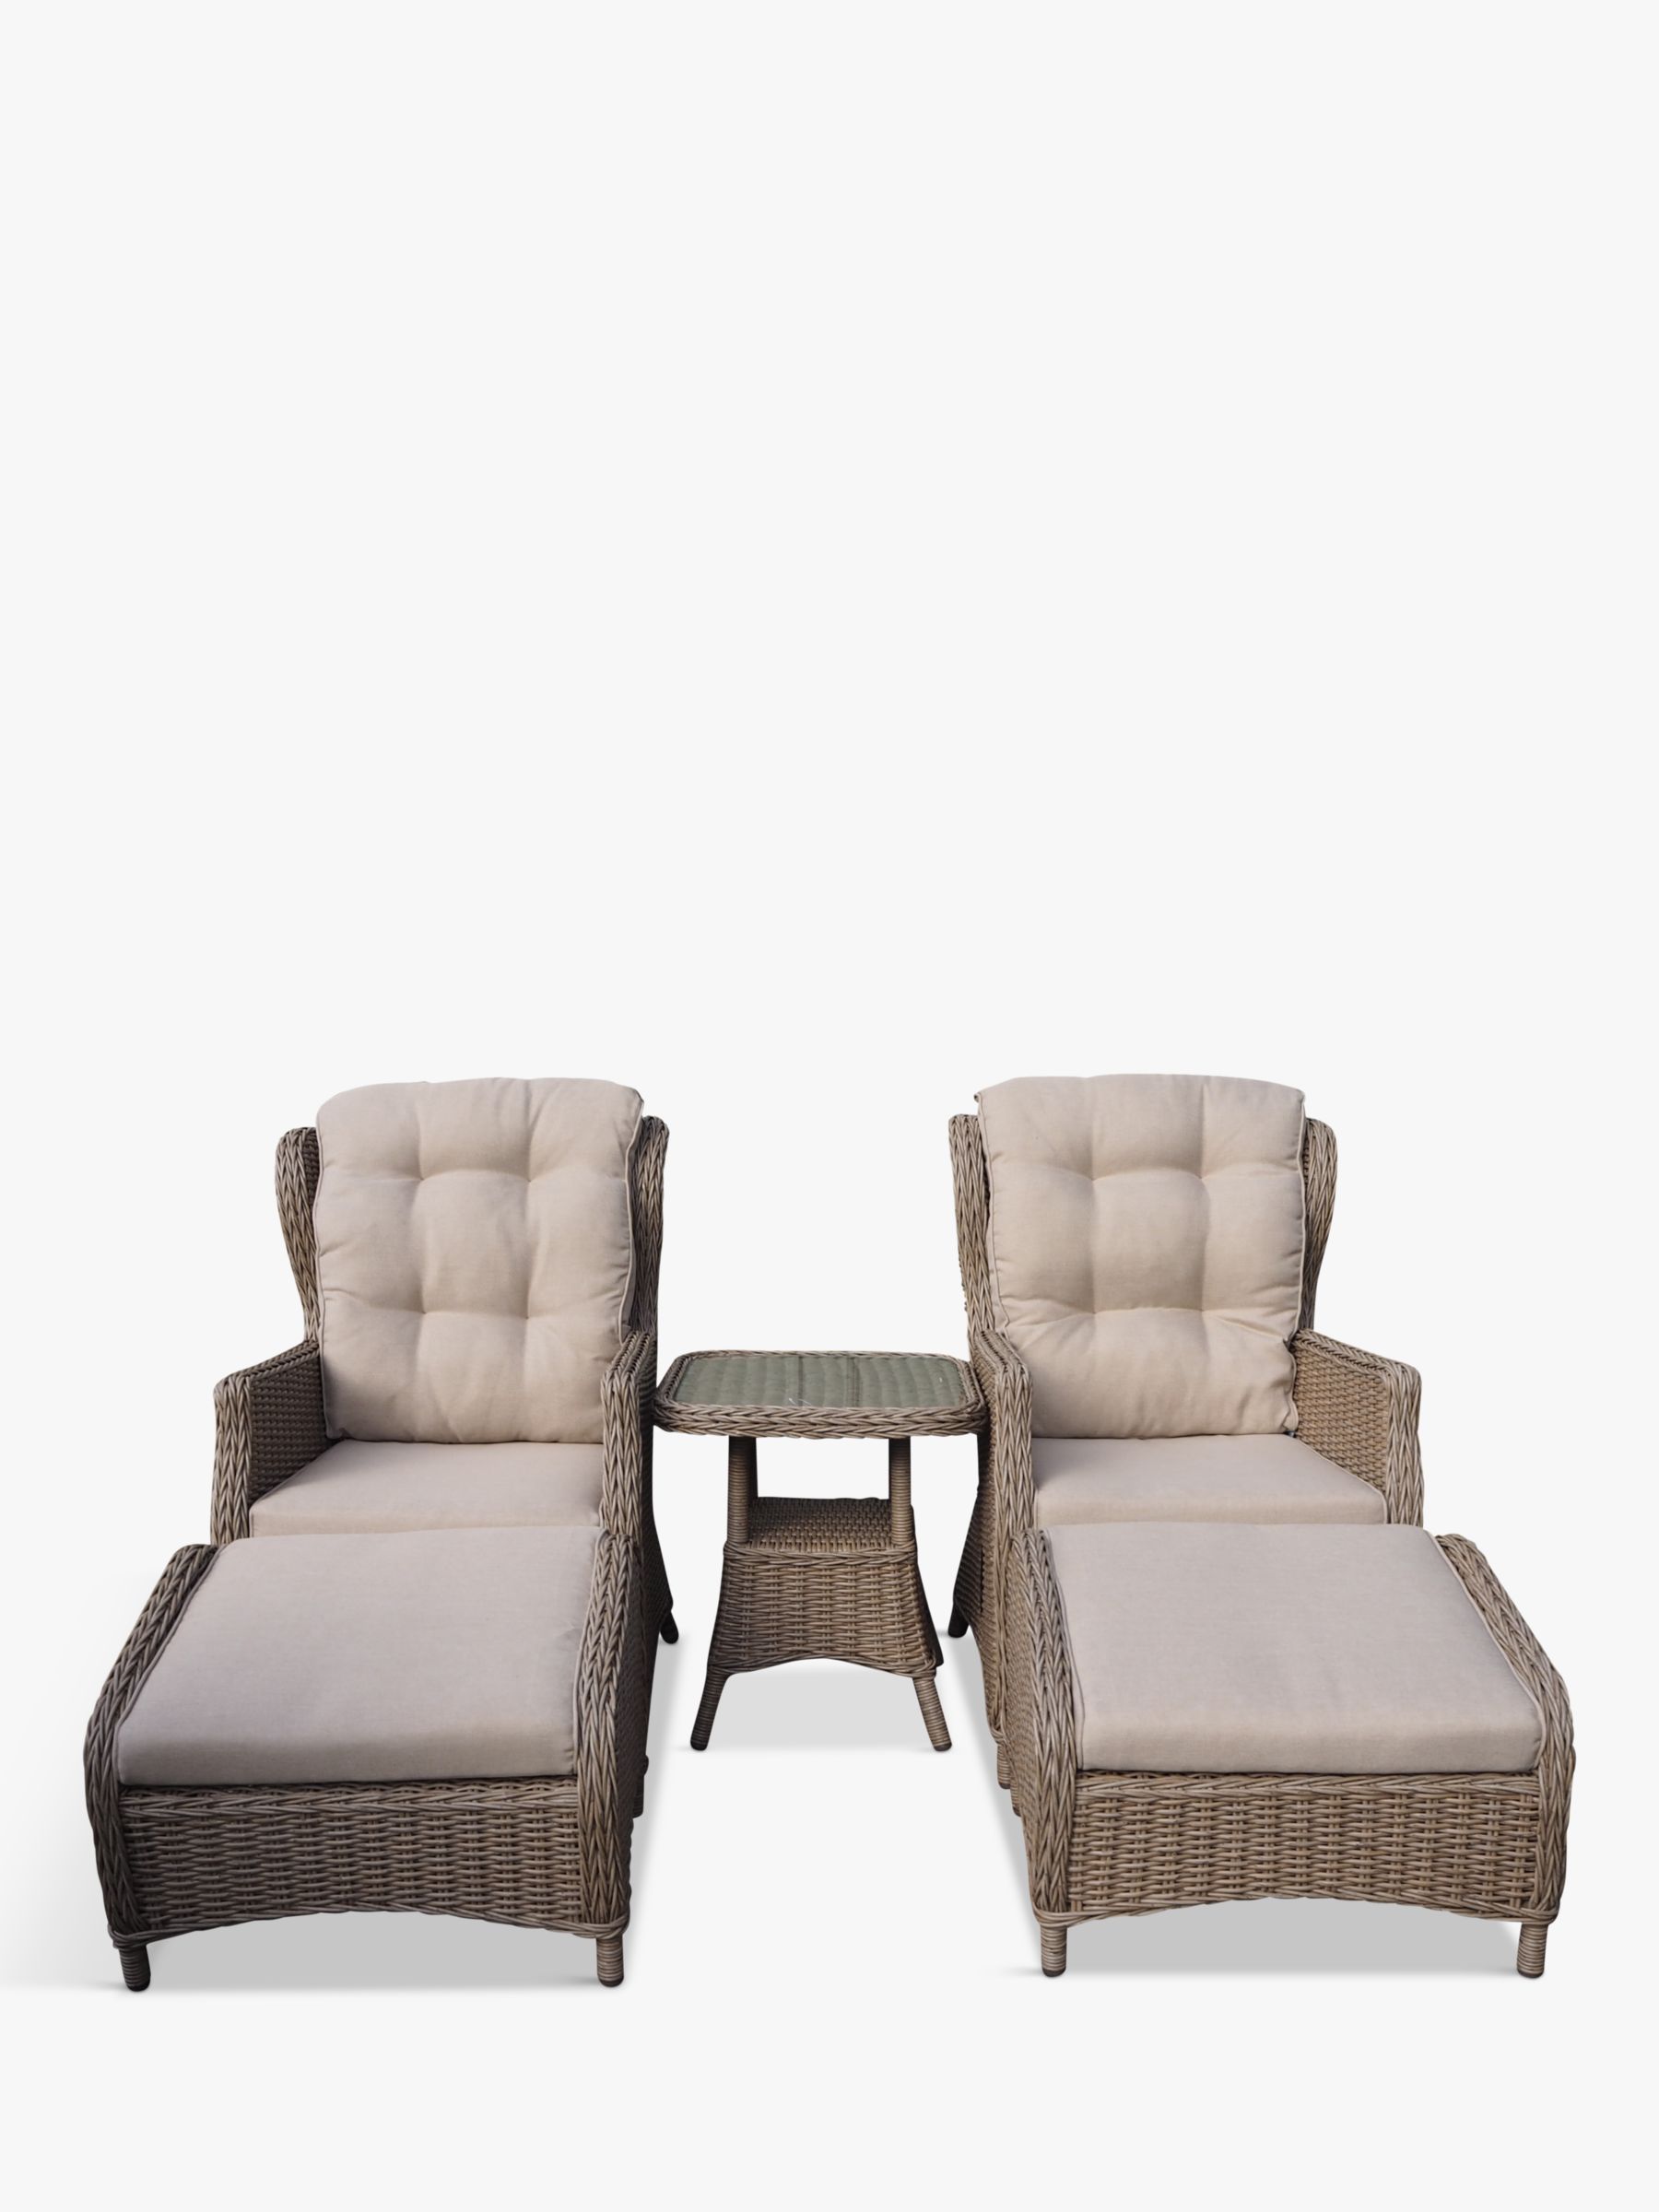 LG Outdoor Saigon 2 Seat Garden Relaxer Table & Chairs Set, Natural at